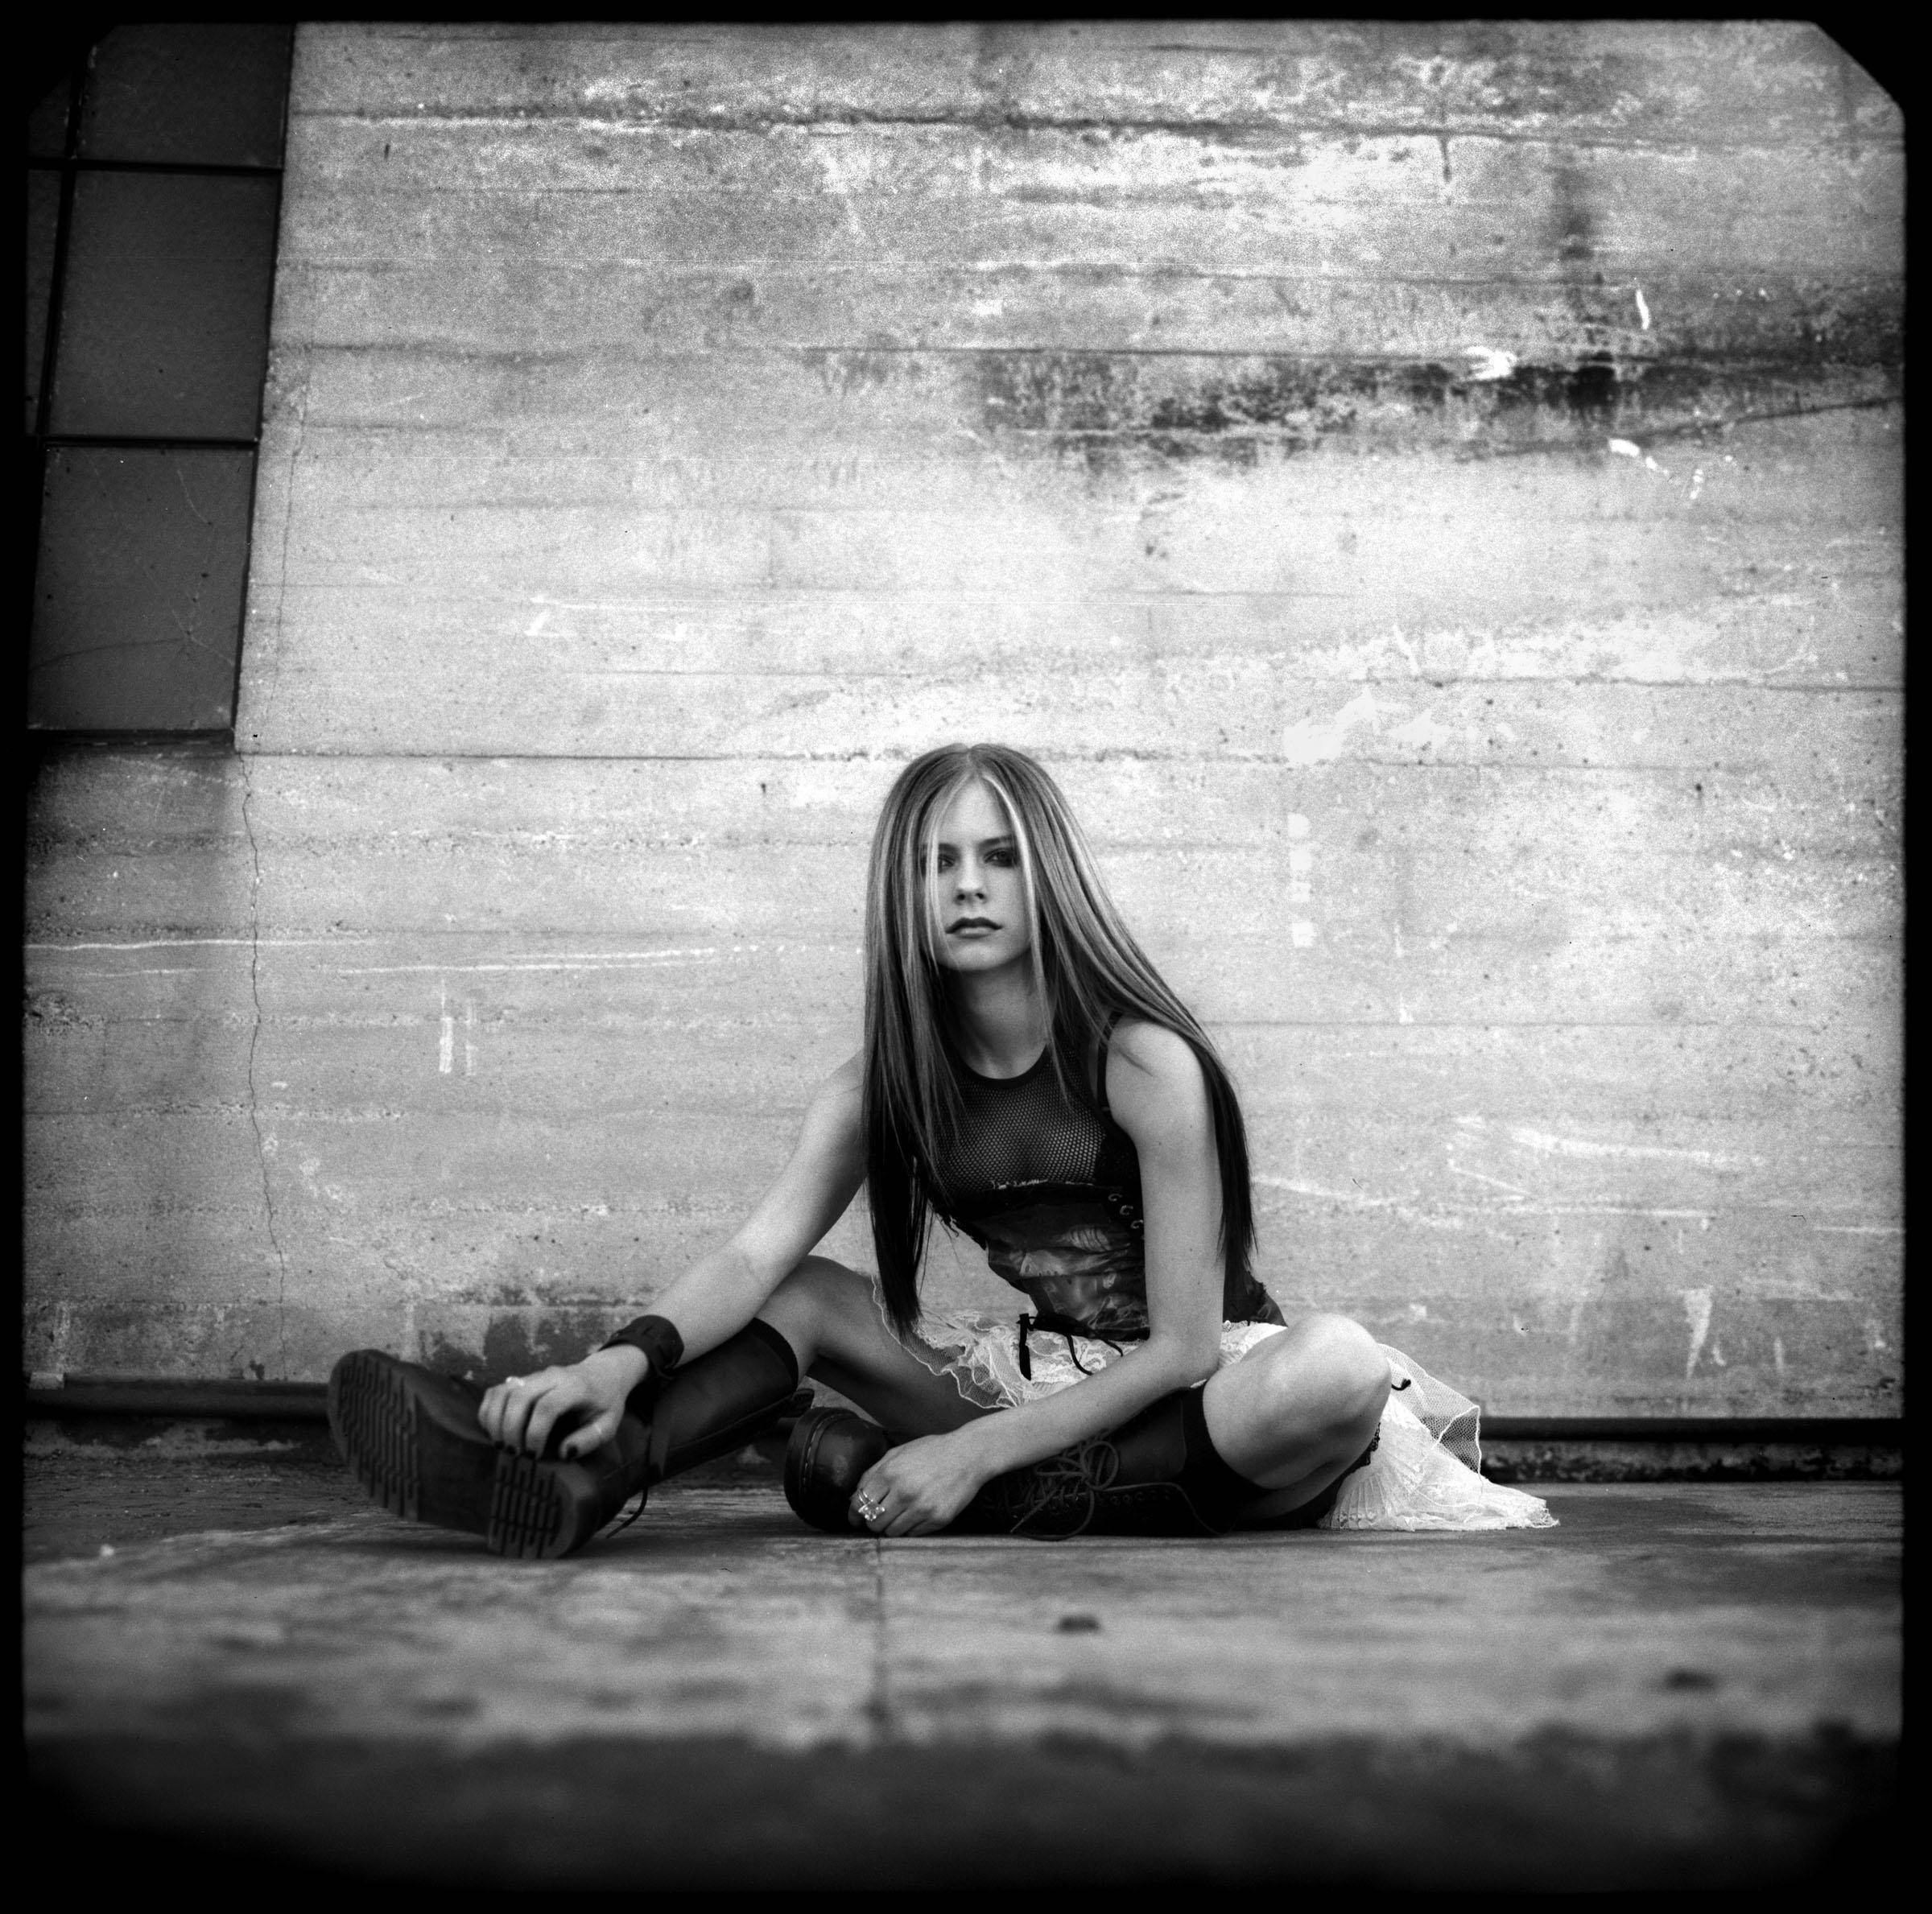 Avril Lavigne photo 19 of 1429 pics, wallpaper - photo #14960 - ThePlace2